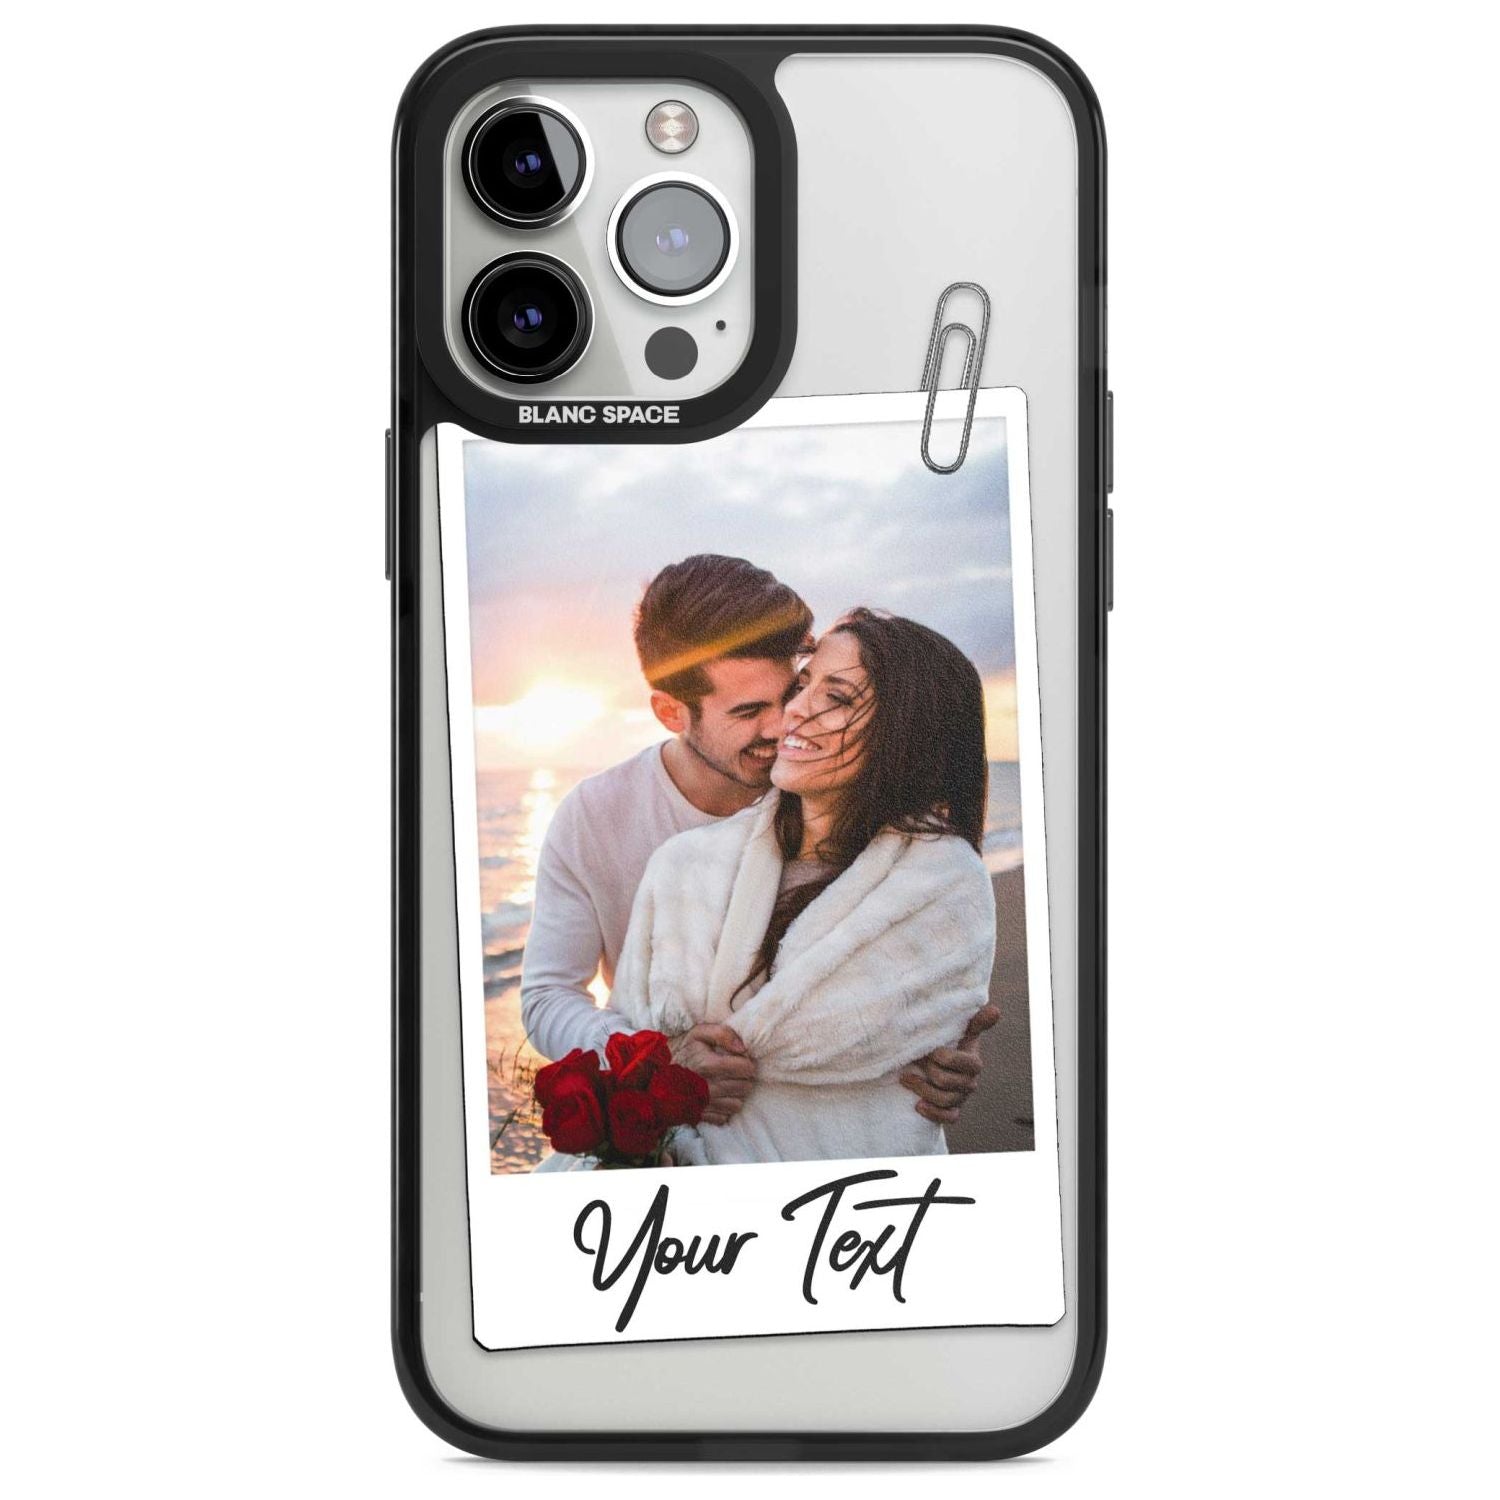 Personalised Instant Camera Photo Custom Phone Case iPhone 13 Pro Max / Magsafe Black Impact Case Blanc Space